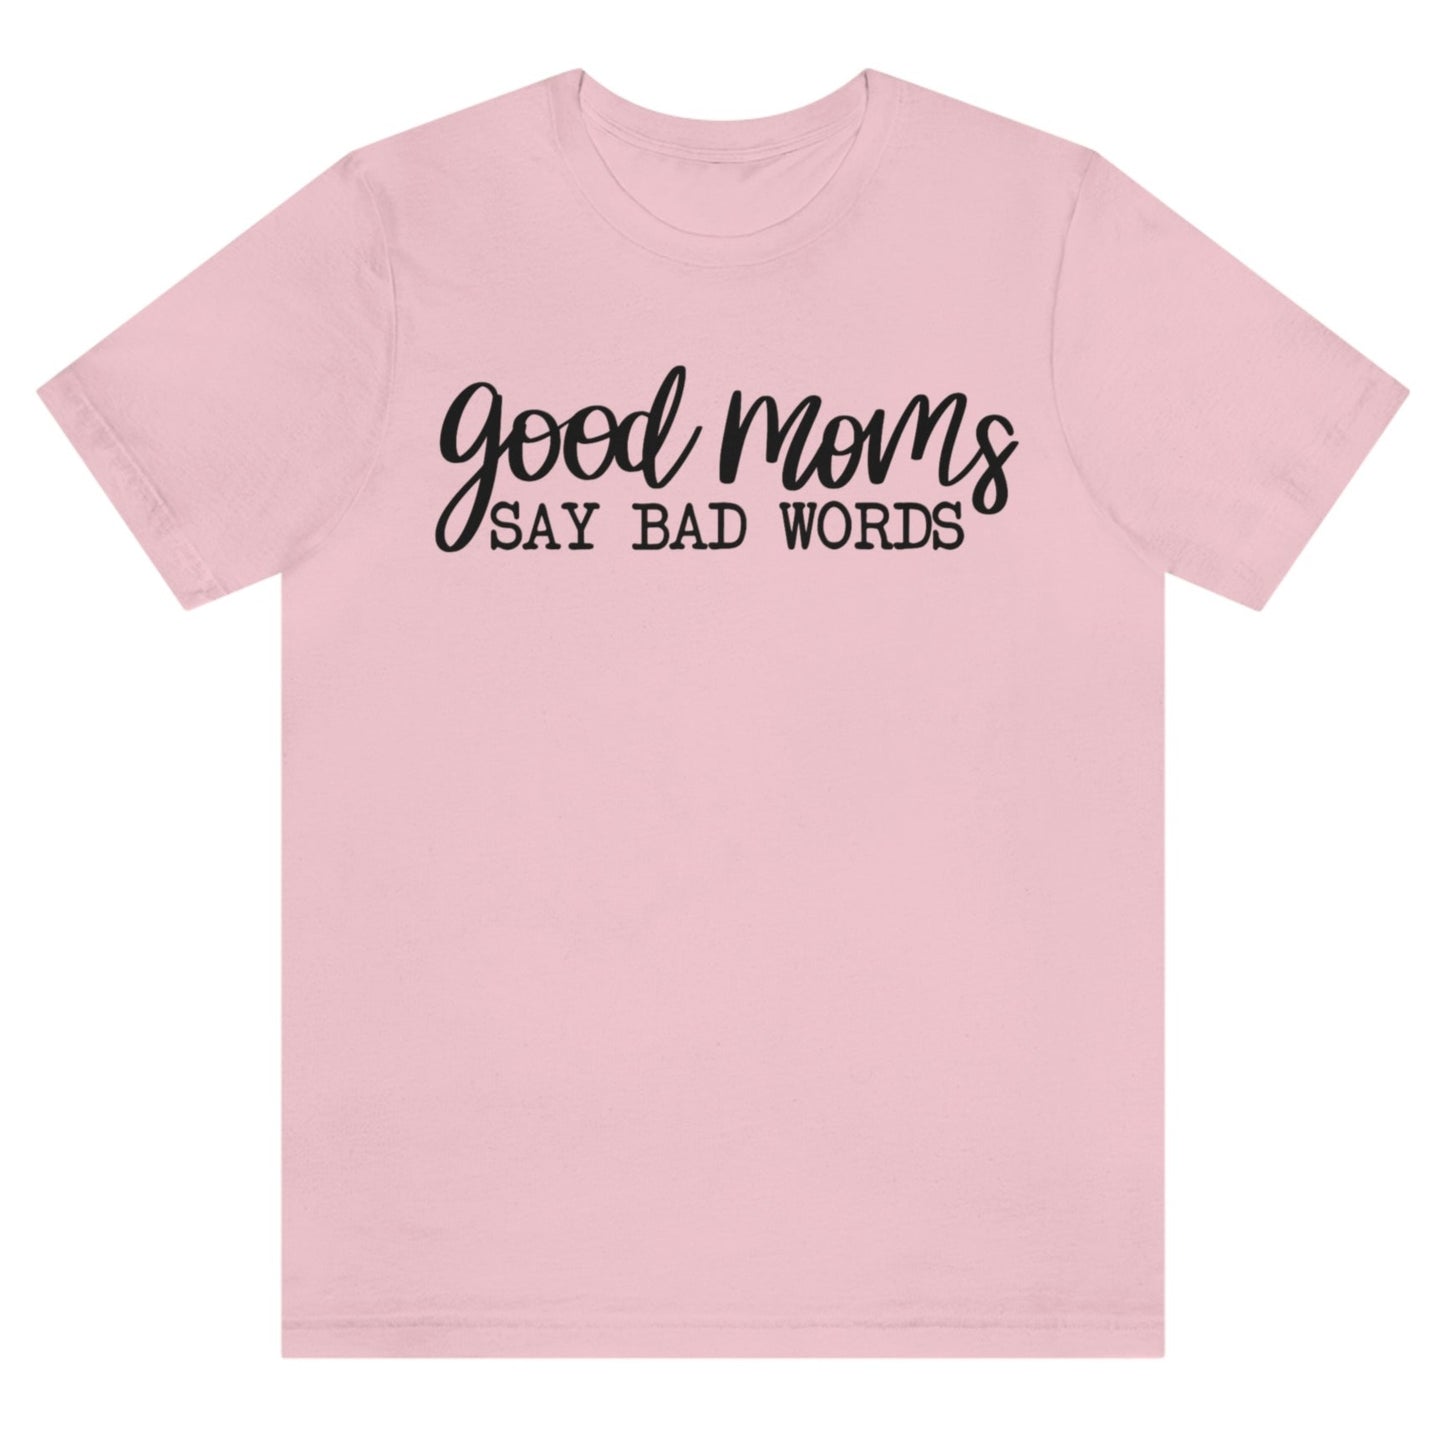 good-moms-say-bad-words-pink-t-shirt-womens-tee